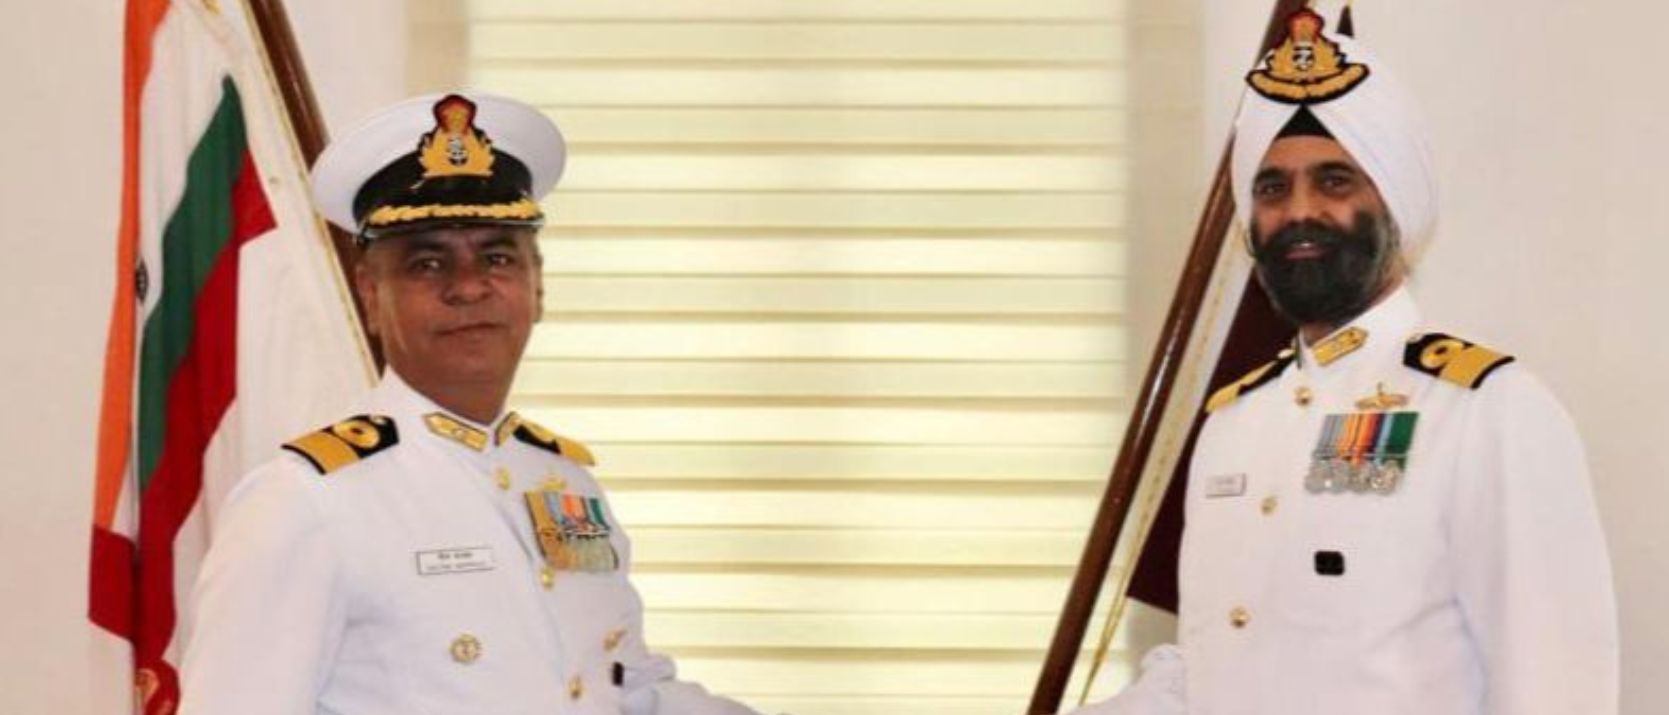 कमोडोर जे एस धनोआ ने भारतीय नौसेना पोत वालसुरा की कमान संभाली